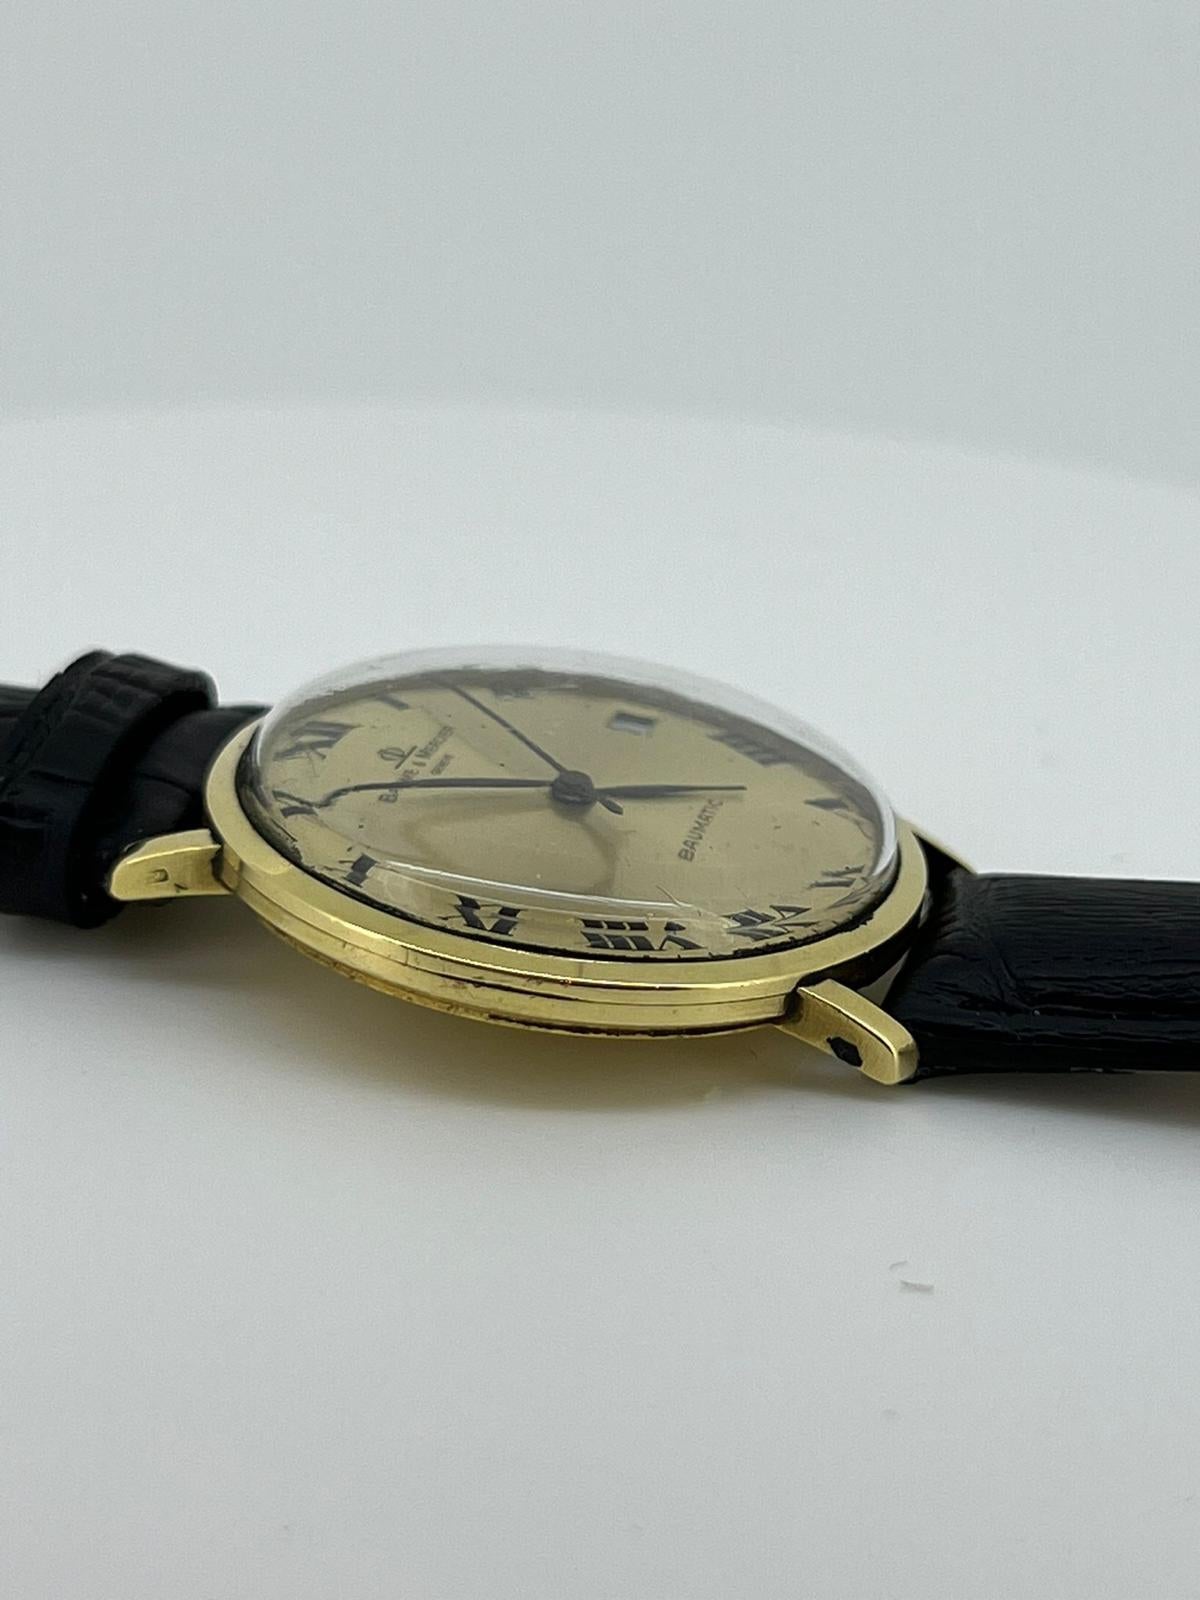 V Rare 18K Gold Baume & Mercier Geneve Baumatic 30 jewels ref 35048 Watch w Date For Sale 2